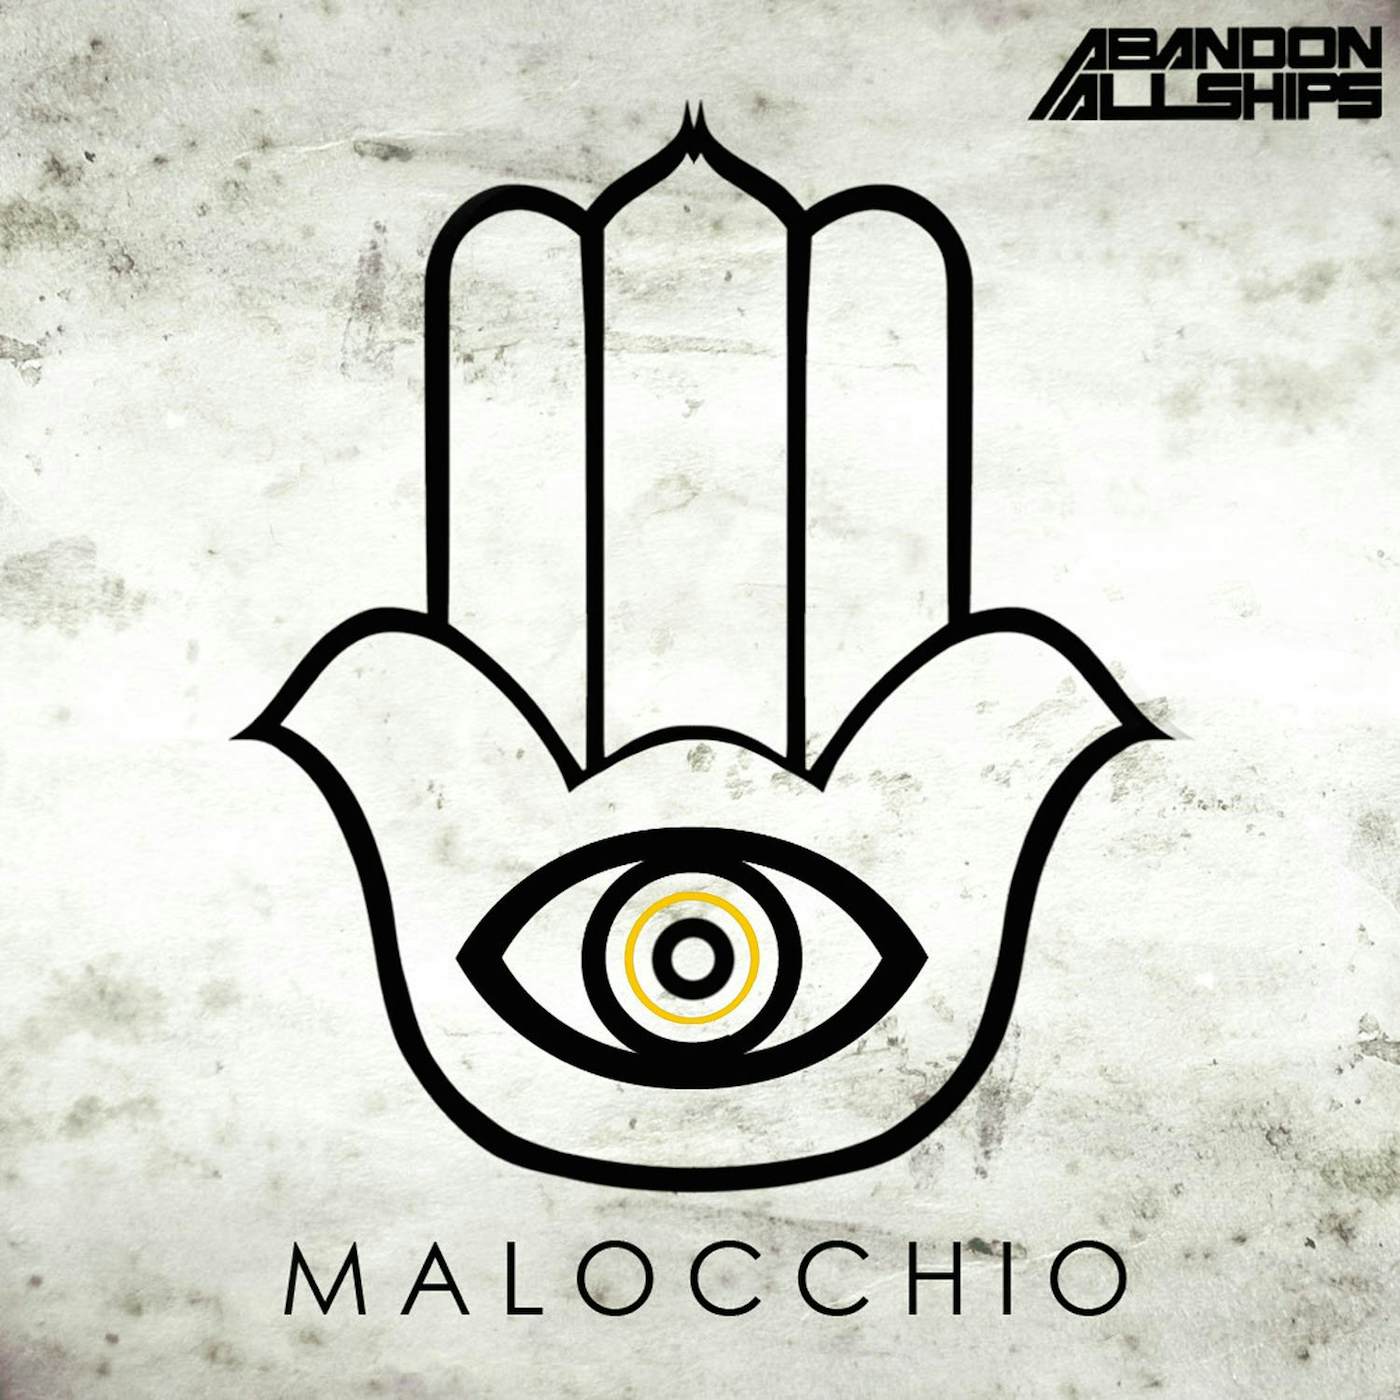 Abandon All Ships - Malocchio - CD (2014)